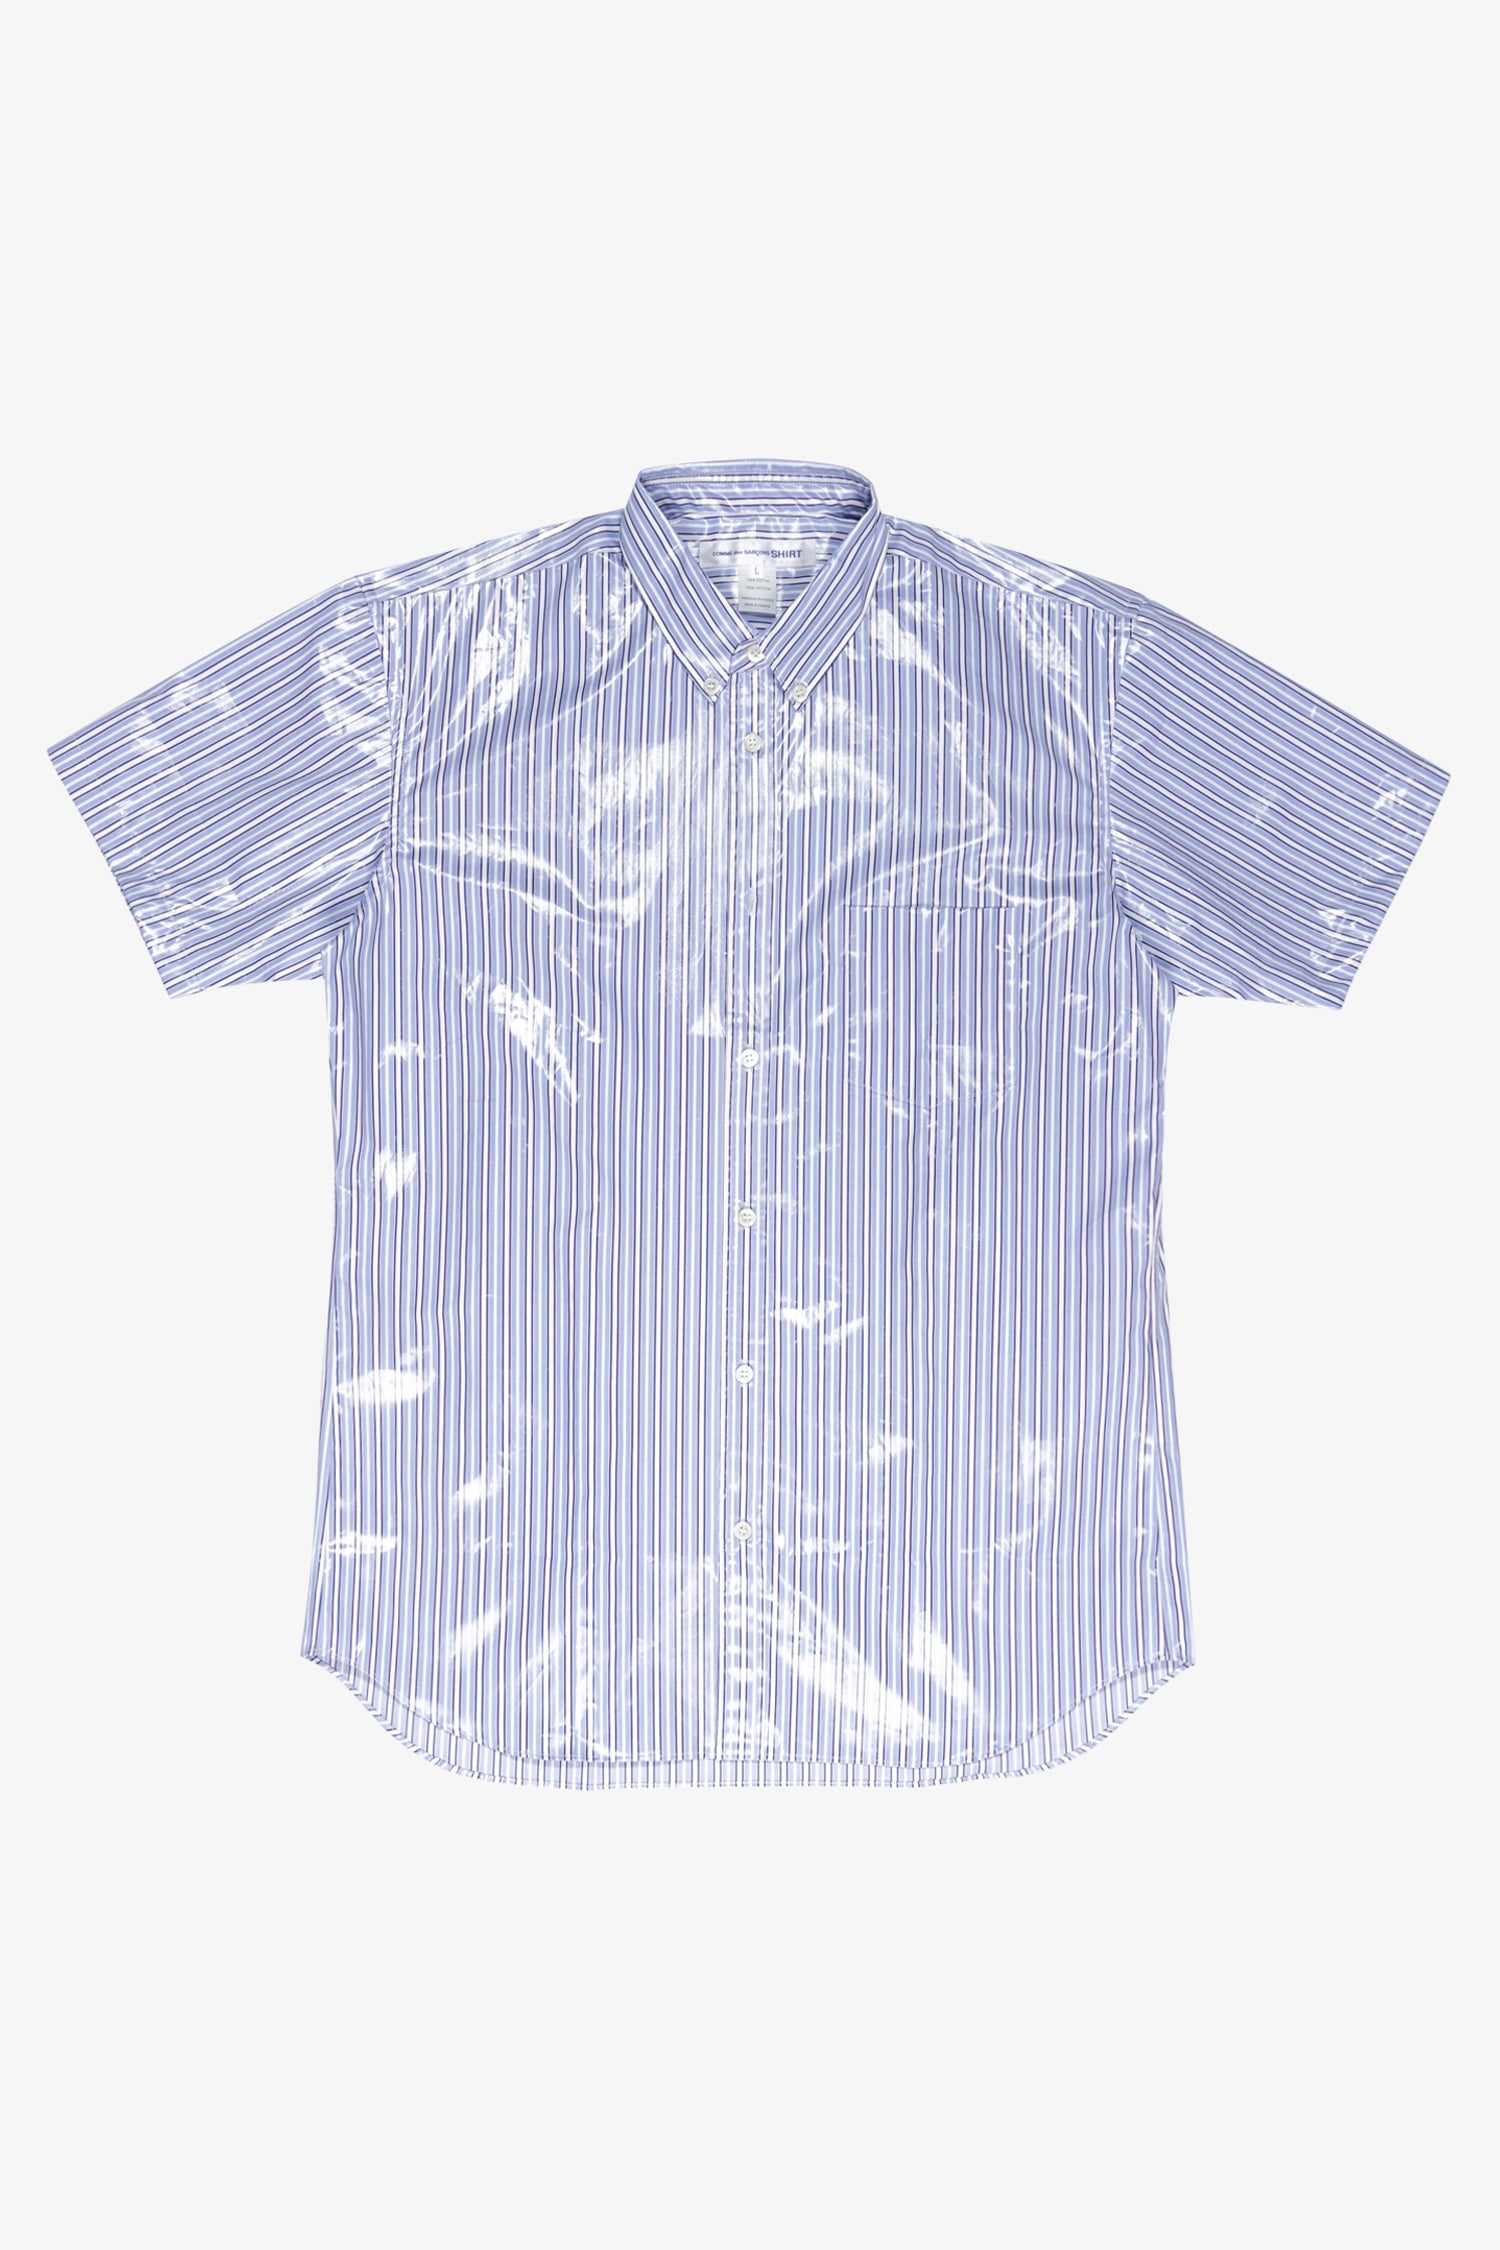 Selectshop FRAME - COMME DES GARÇONS SHIRT Coated Short Sleeves Striped Shirt Shirt Dubai